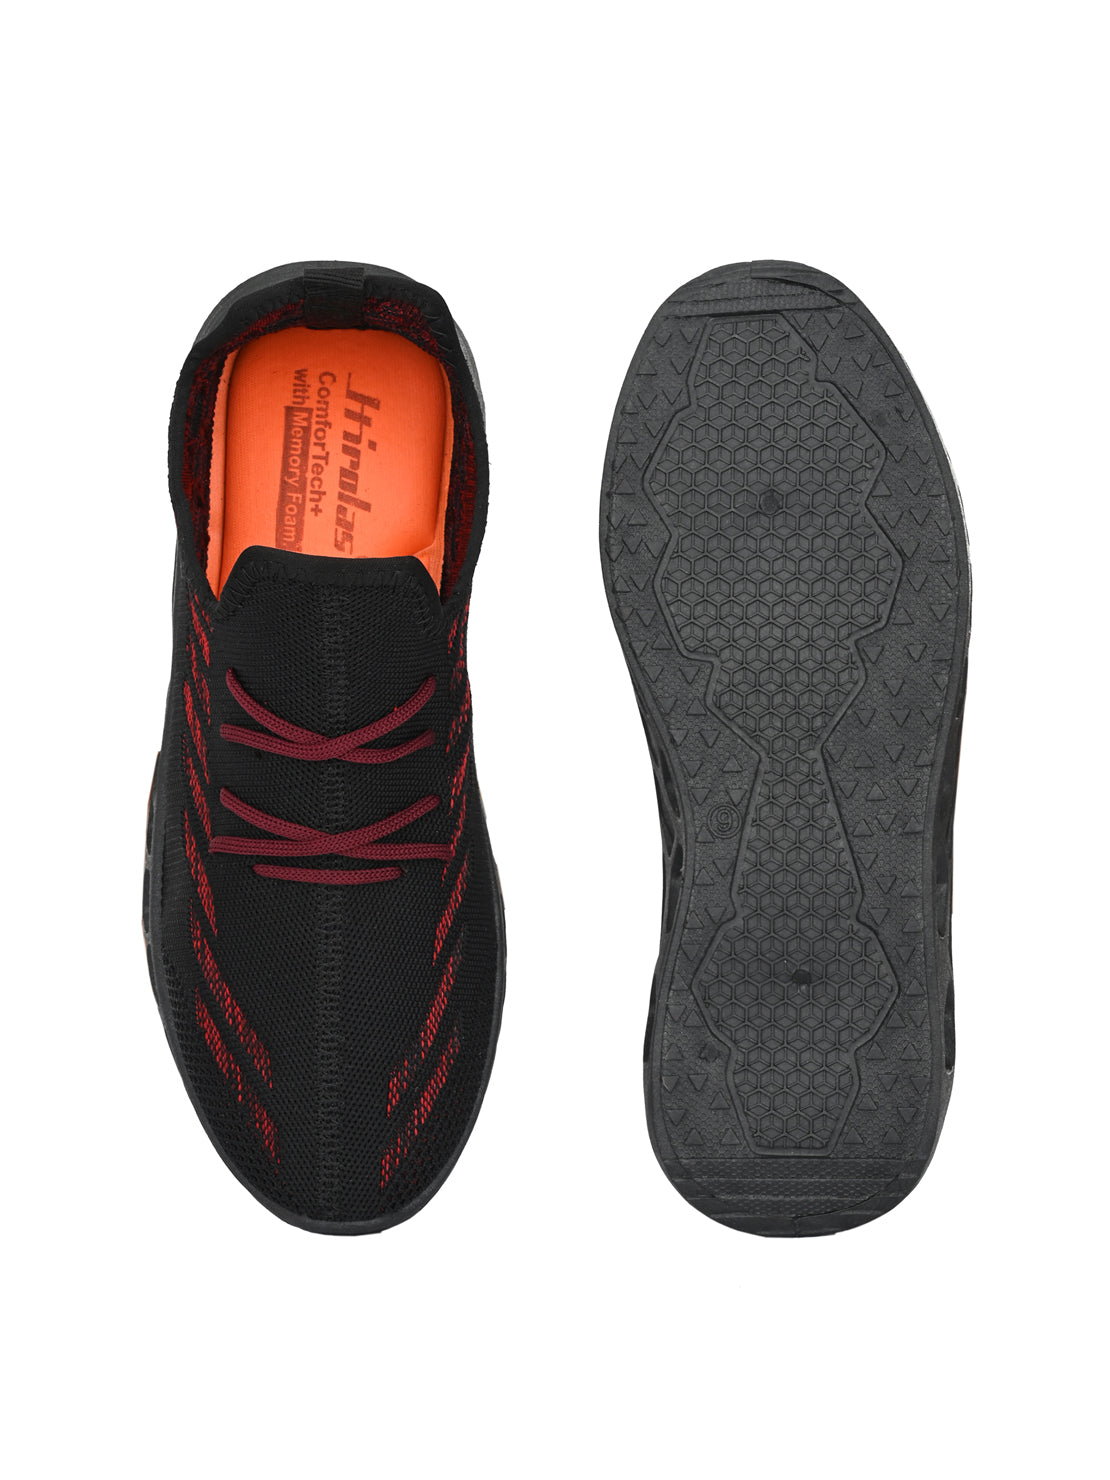 Hirolas® Men's Black Knitted Running/Walking/Gym Lace Up Sport Shoes (HRL2051BLK)